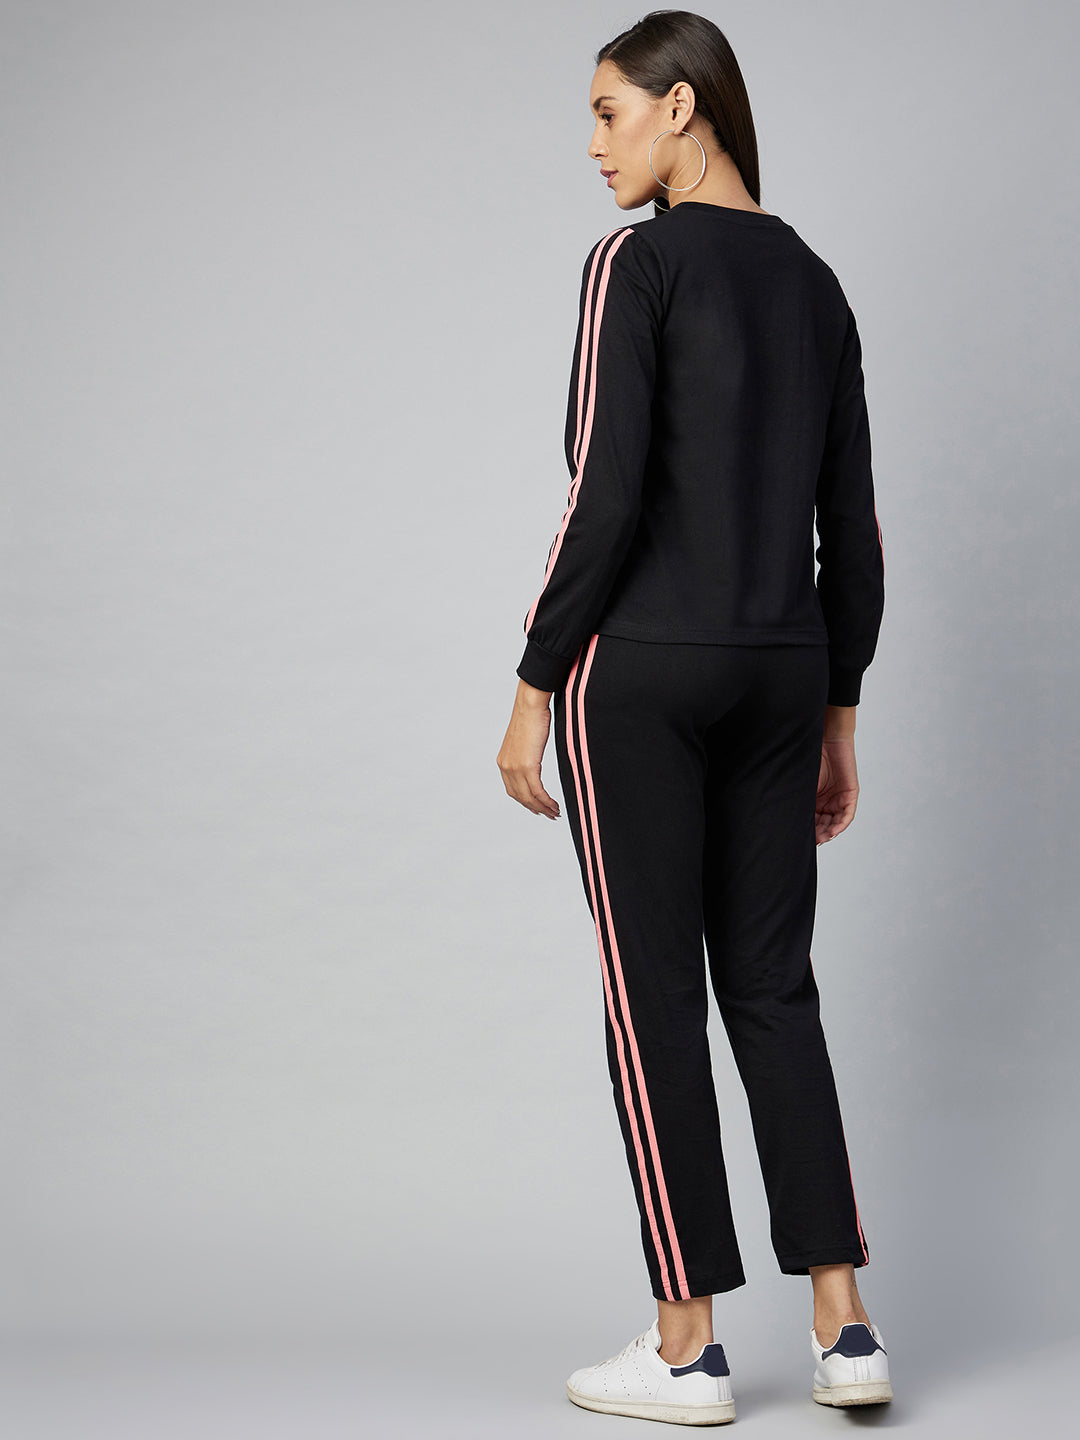 Women's Cotton Black Track Suit Set with Pink Stripe